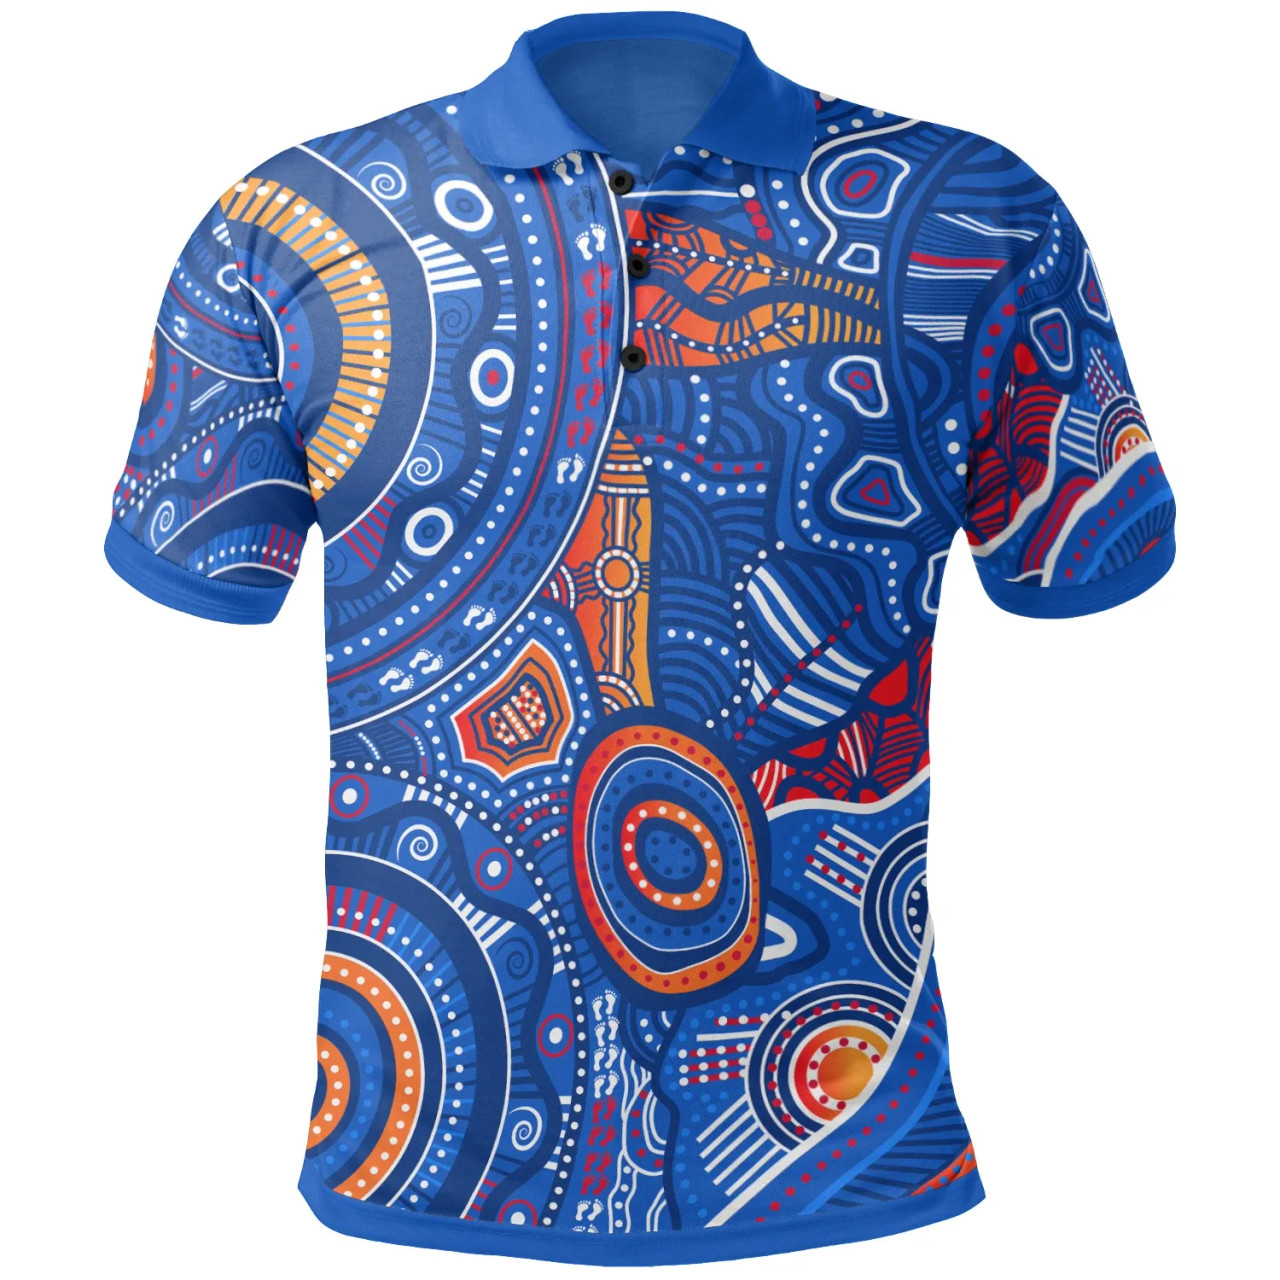 Australia Aboriginal Polo Shirt - Indigenous Footprint Patterns Blue Color